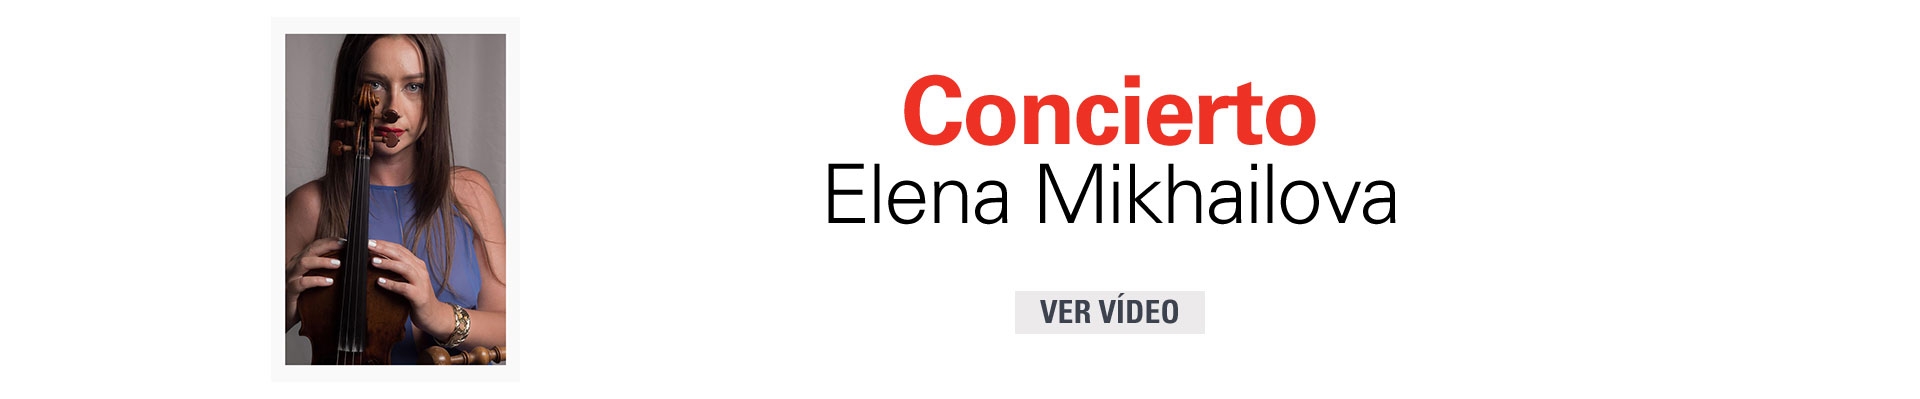 Concierto Elena Mikhailova